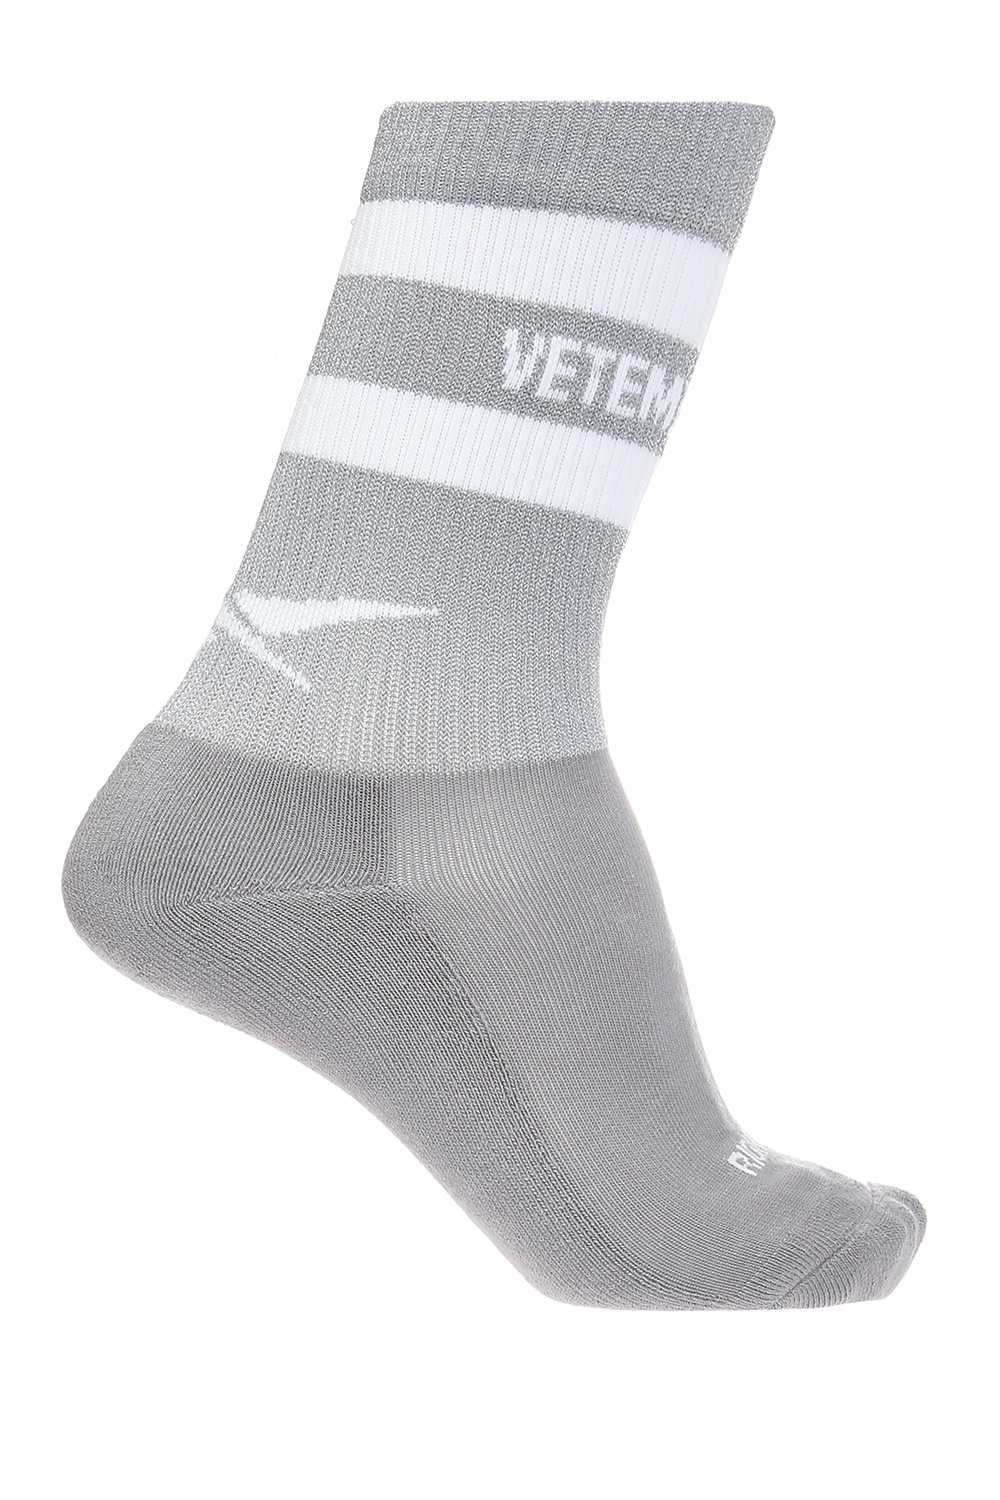 reebok vetements socks reflective